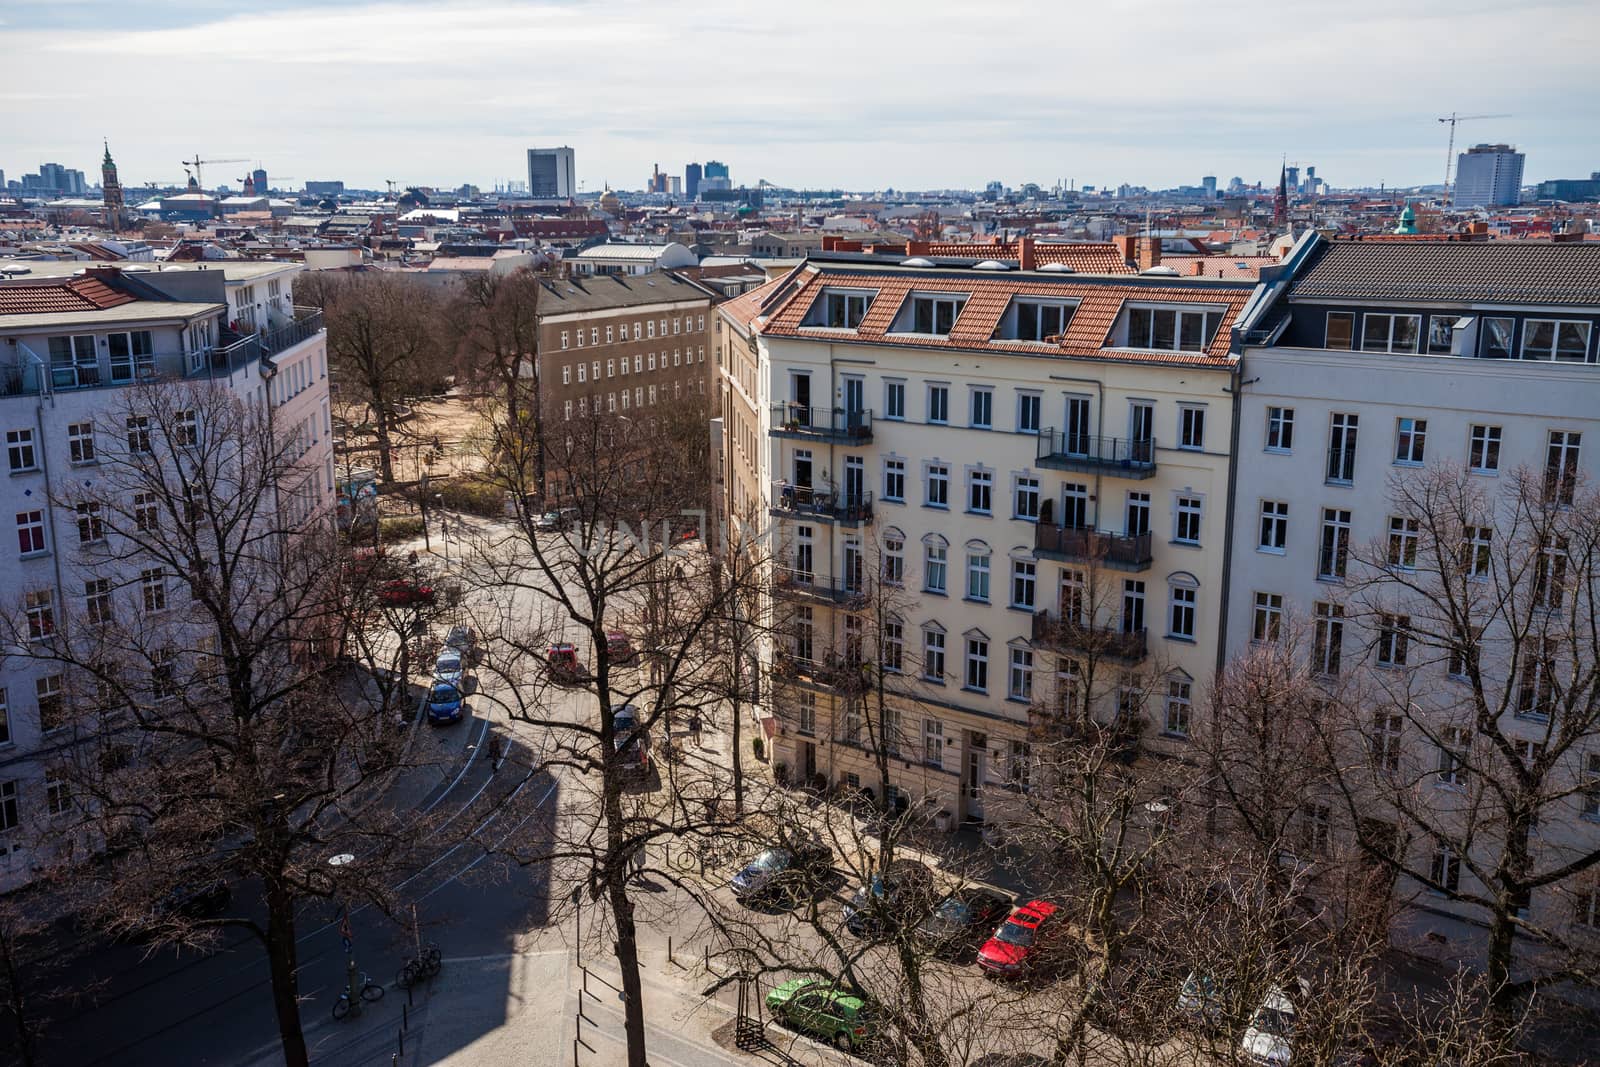 Aerial view of Berlin's Prenzlauer Berg neighborhood